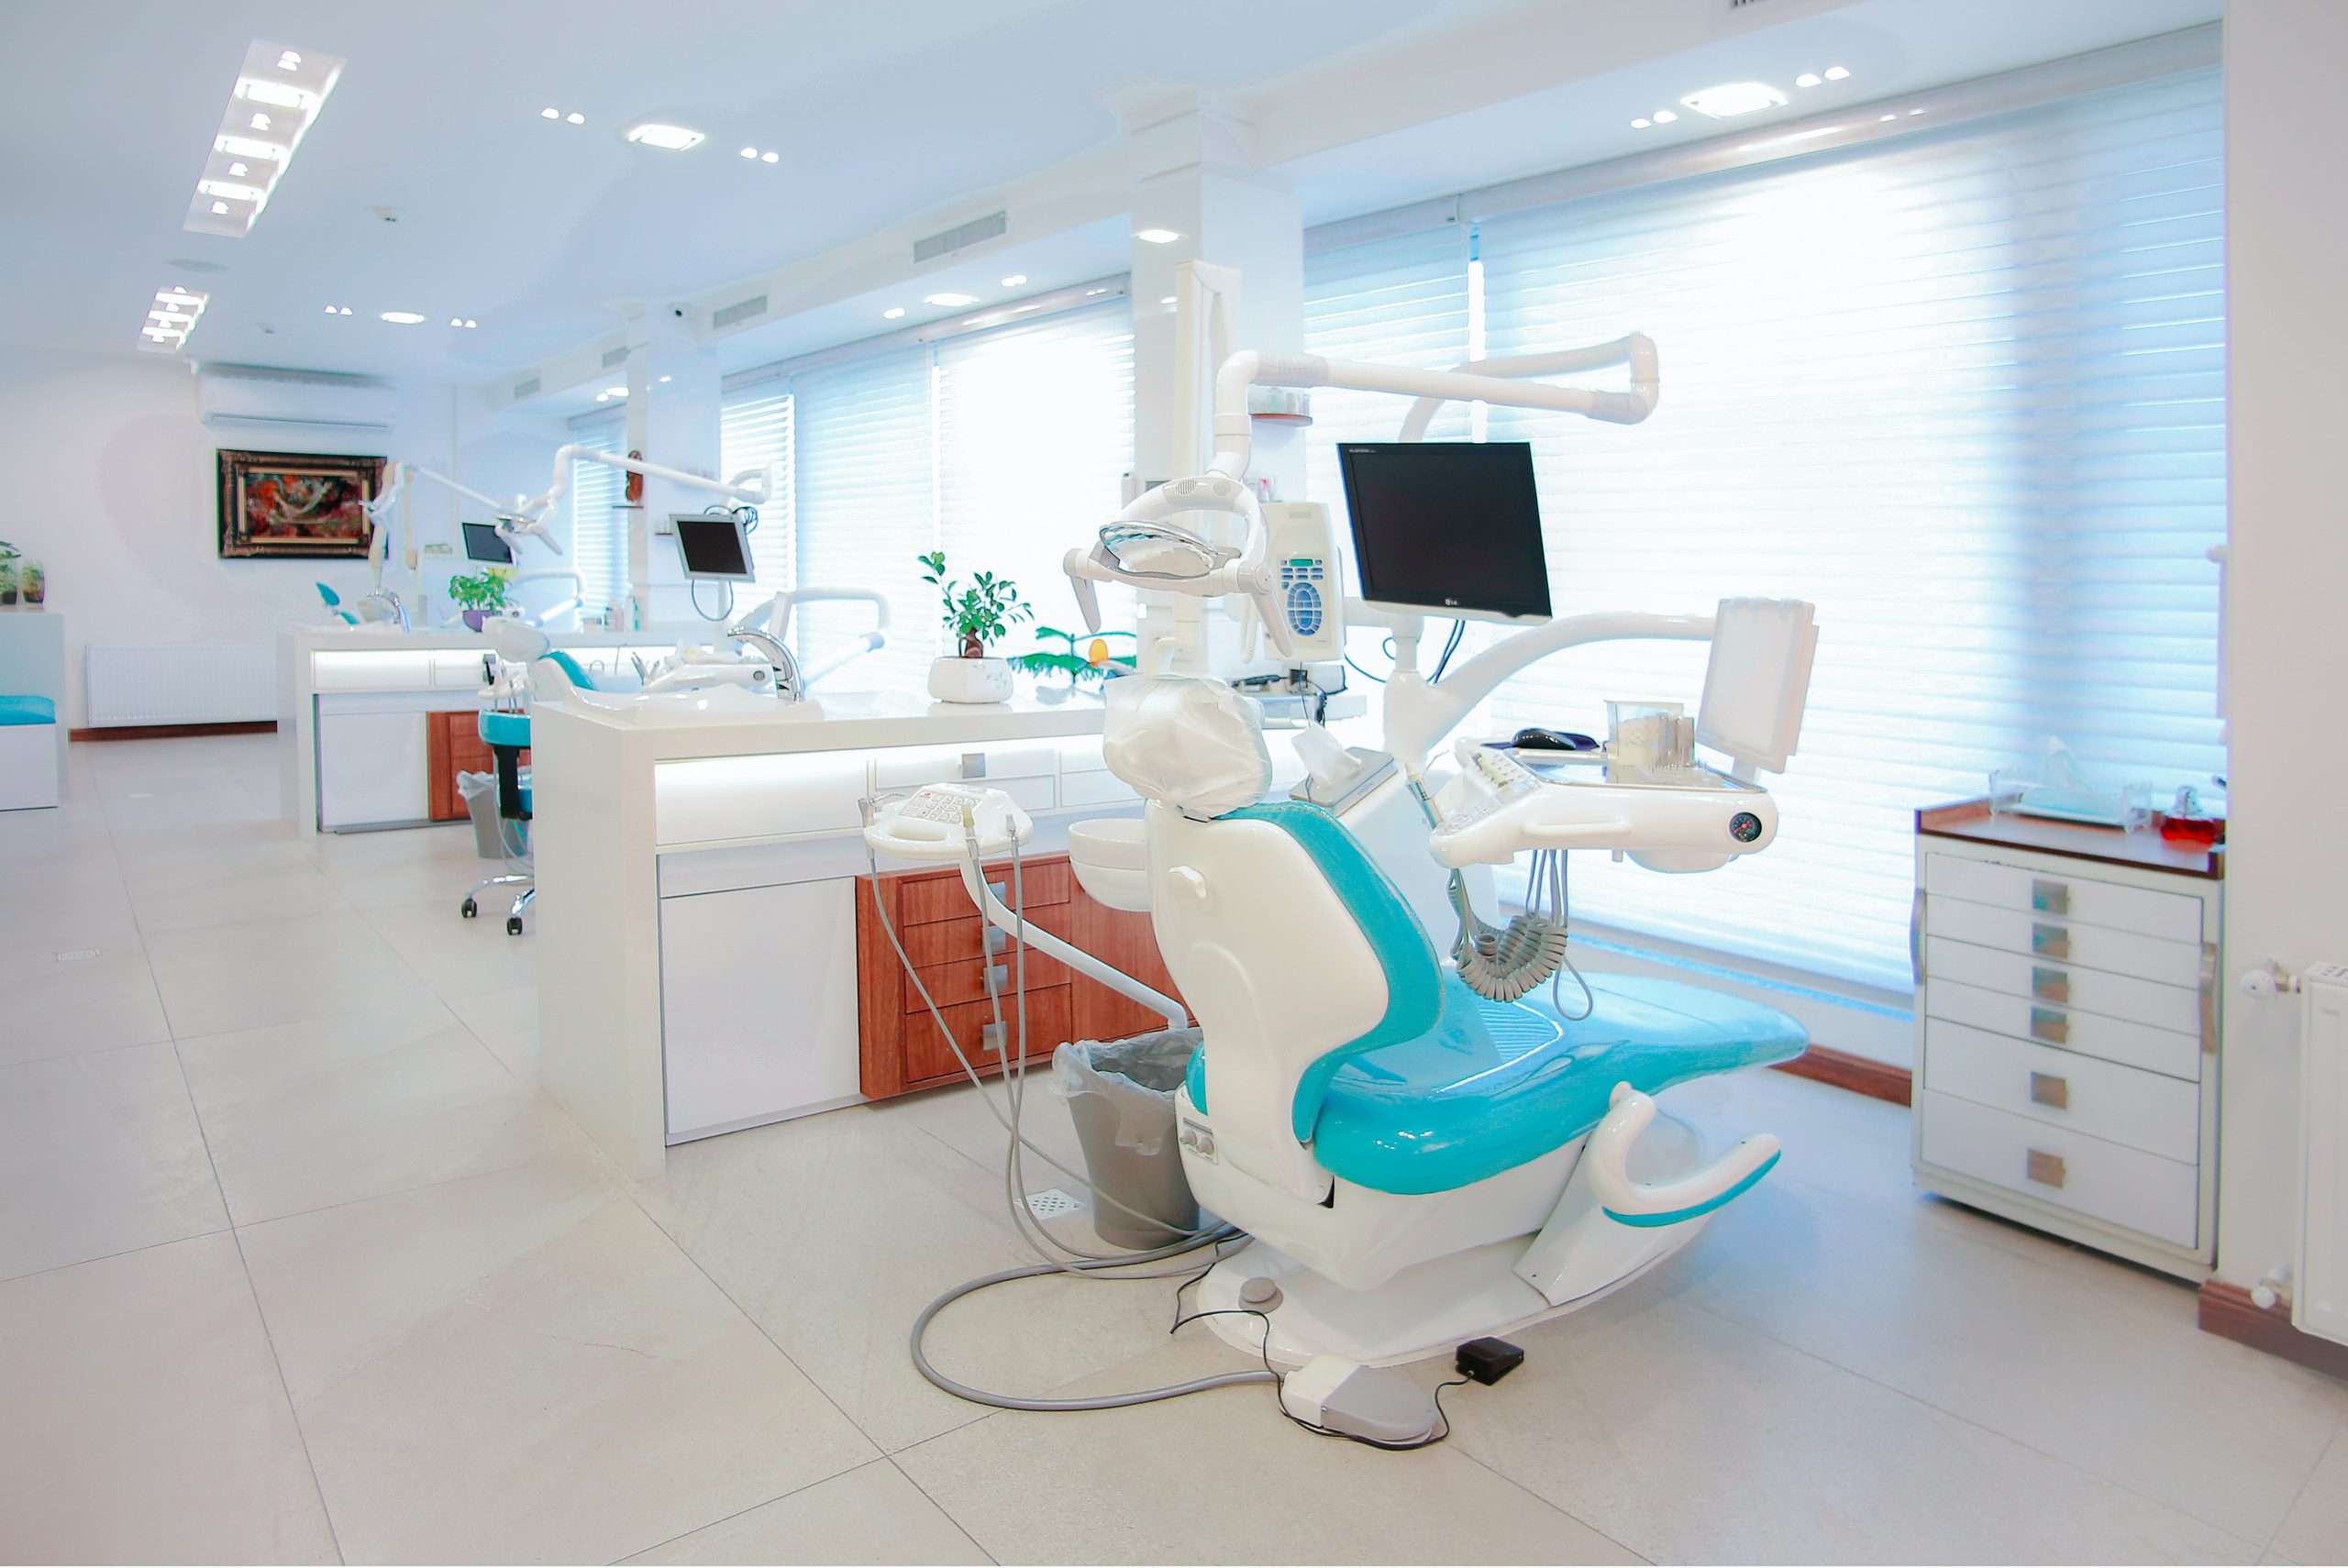 Innovative Marketing Solutions for the Modern Dental Office